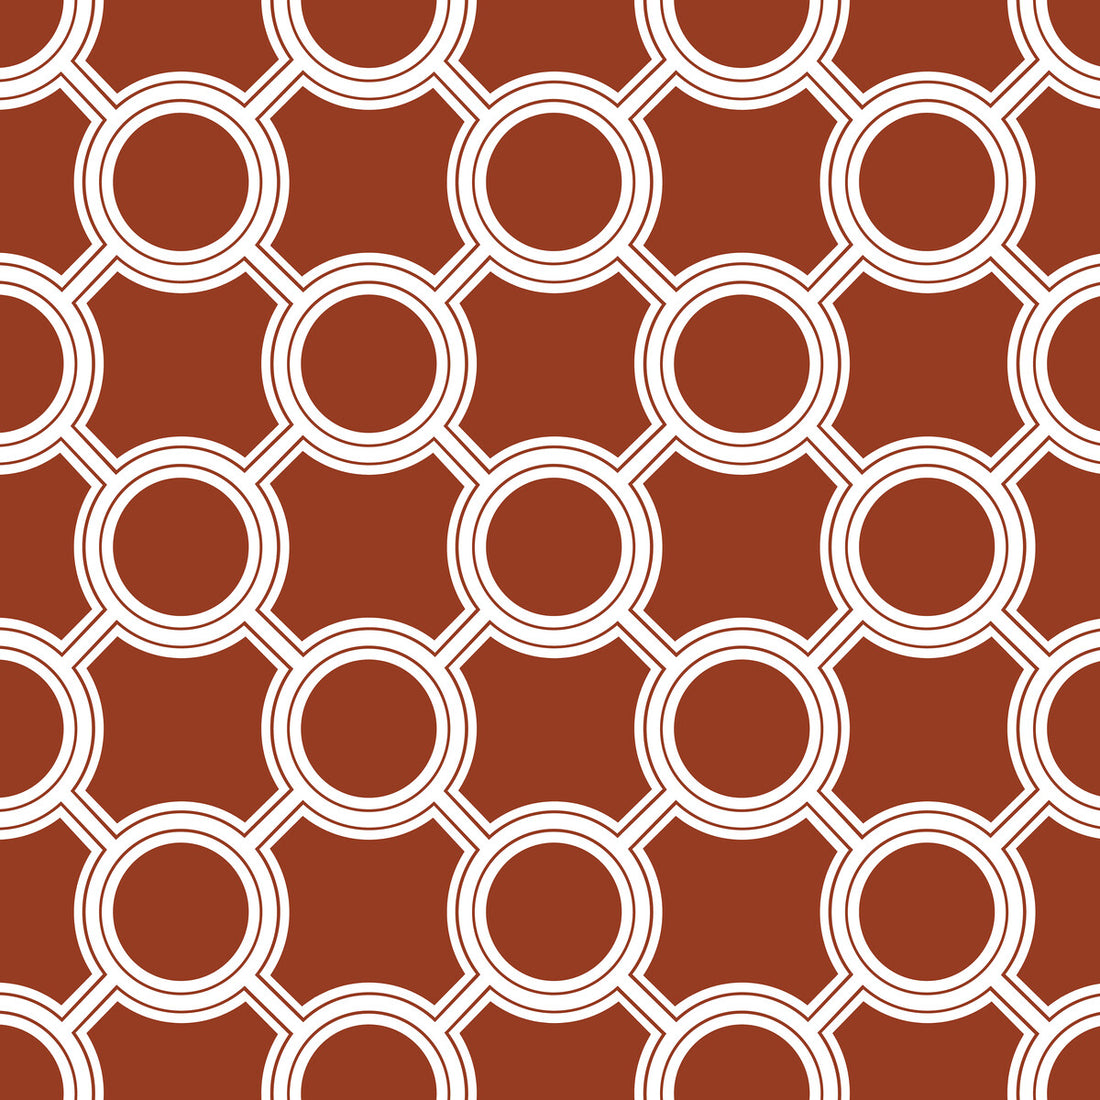 Aymara fabric in teja color - pattern GDT5600.001.0 - by Gaston y Daniela in the Gaston Nuevo Mundo collection